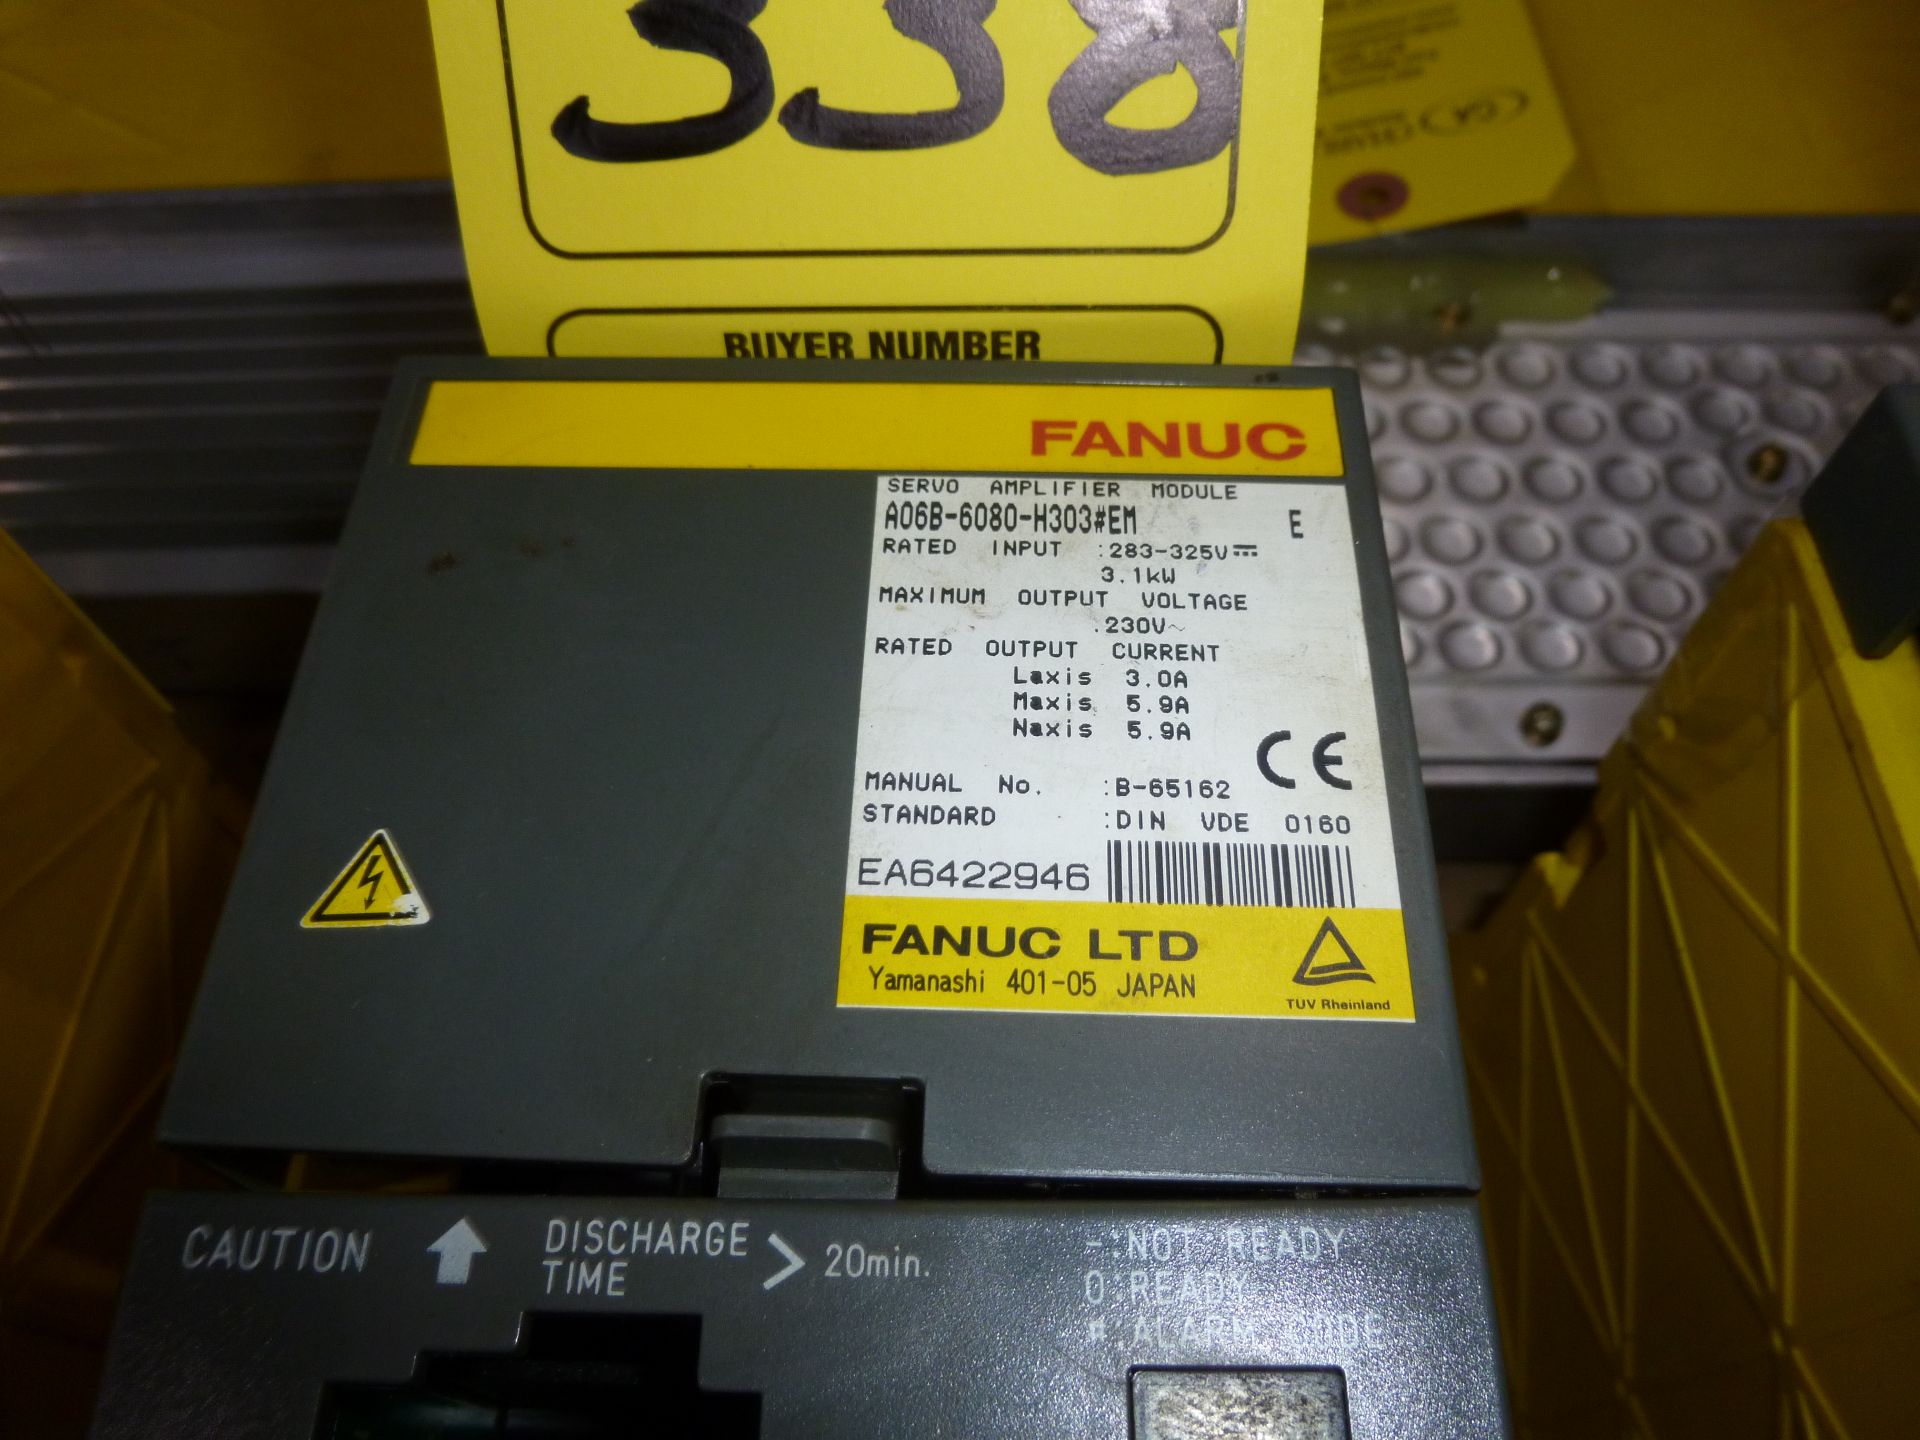 Fanuc servo amplifier module model A06B-6080-H303 #EM, as always with Brolyn LLC auctions, all - Image 2 of 2